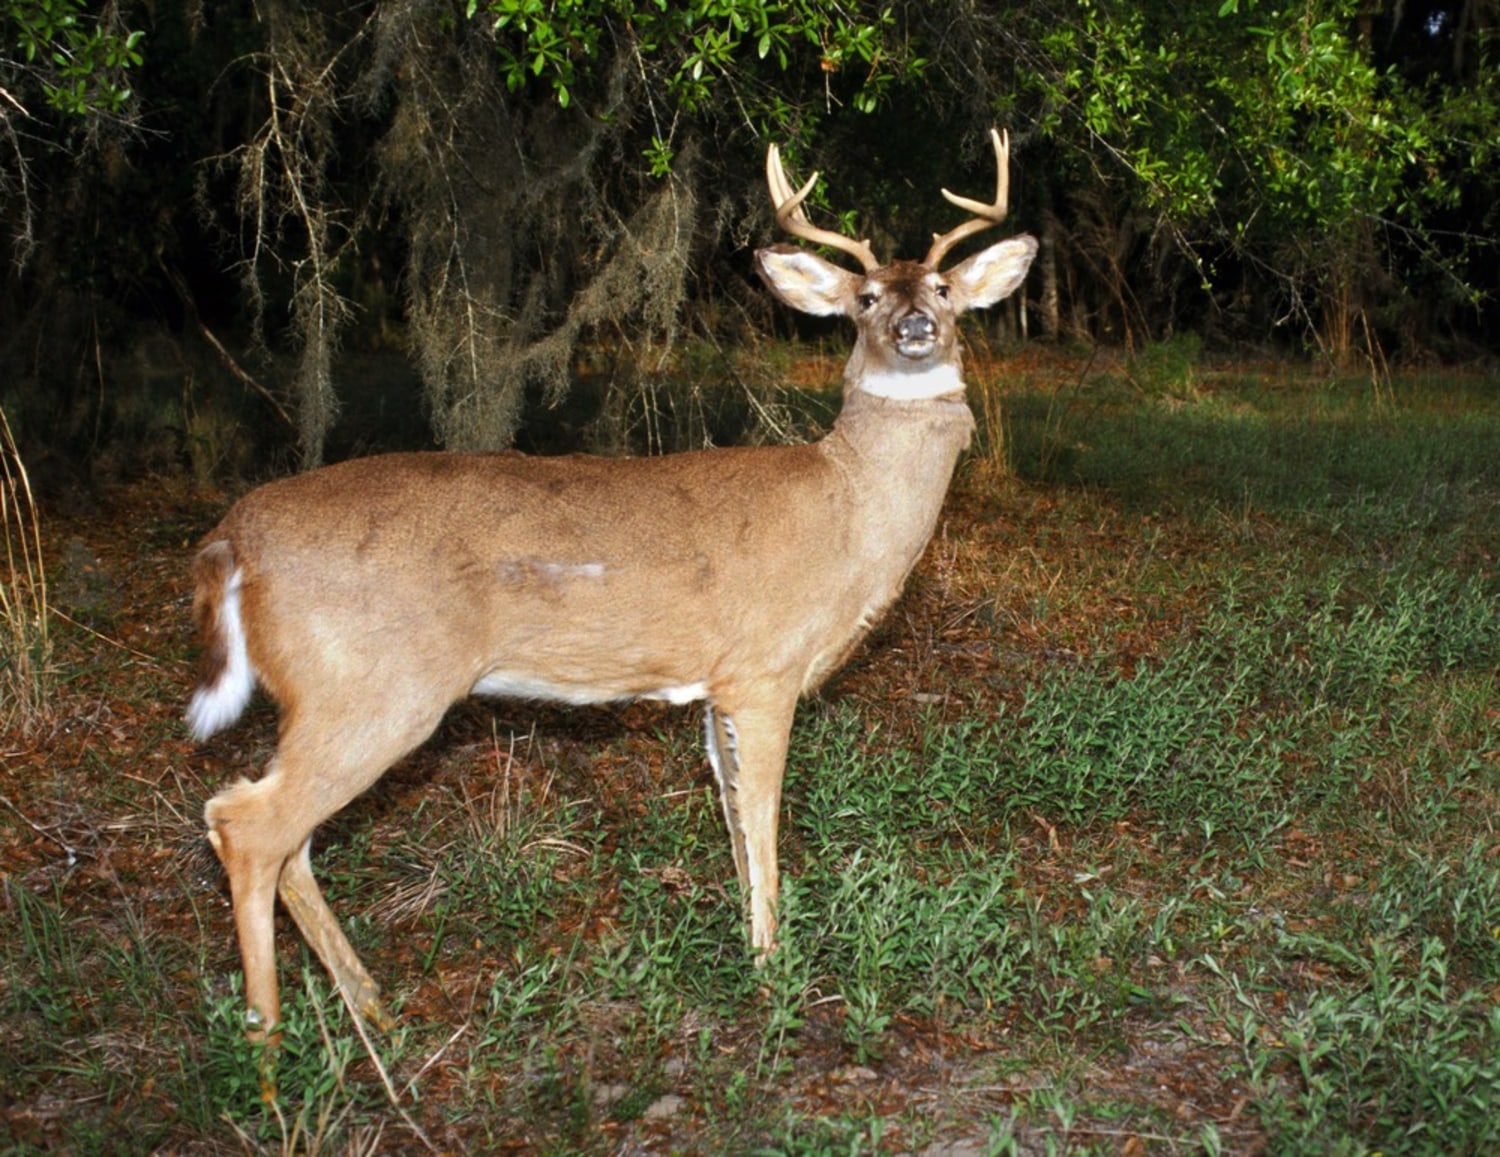 Wildlife officials use robo-deer to